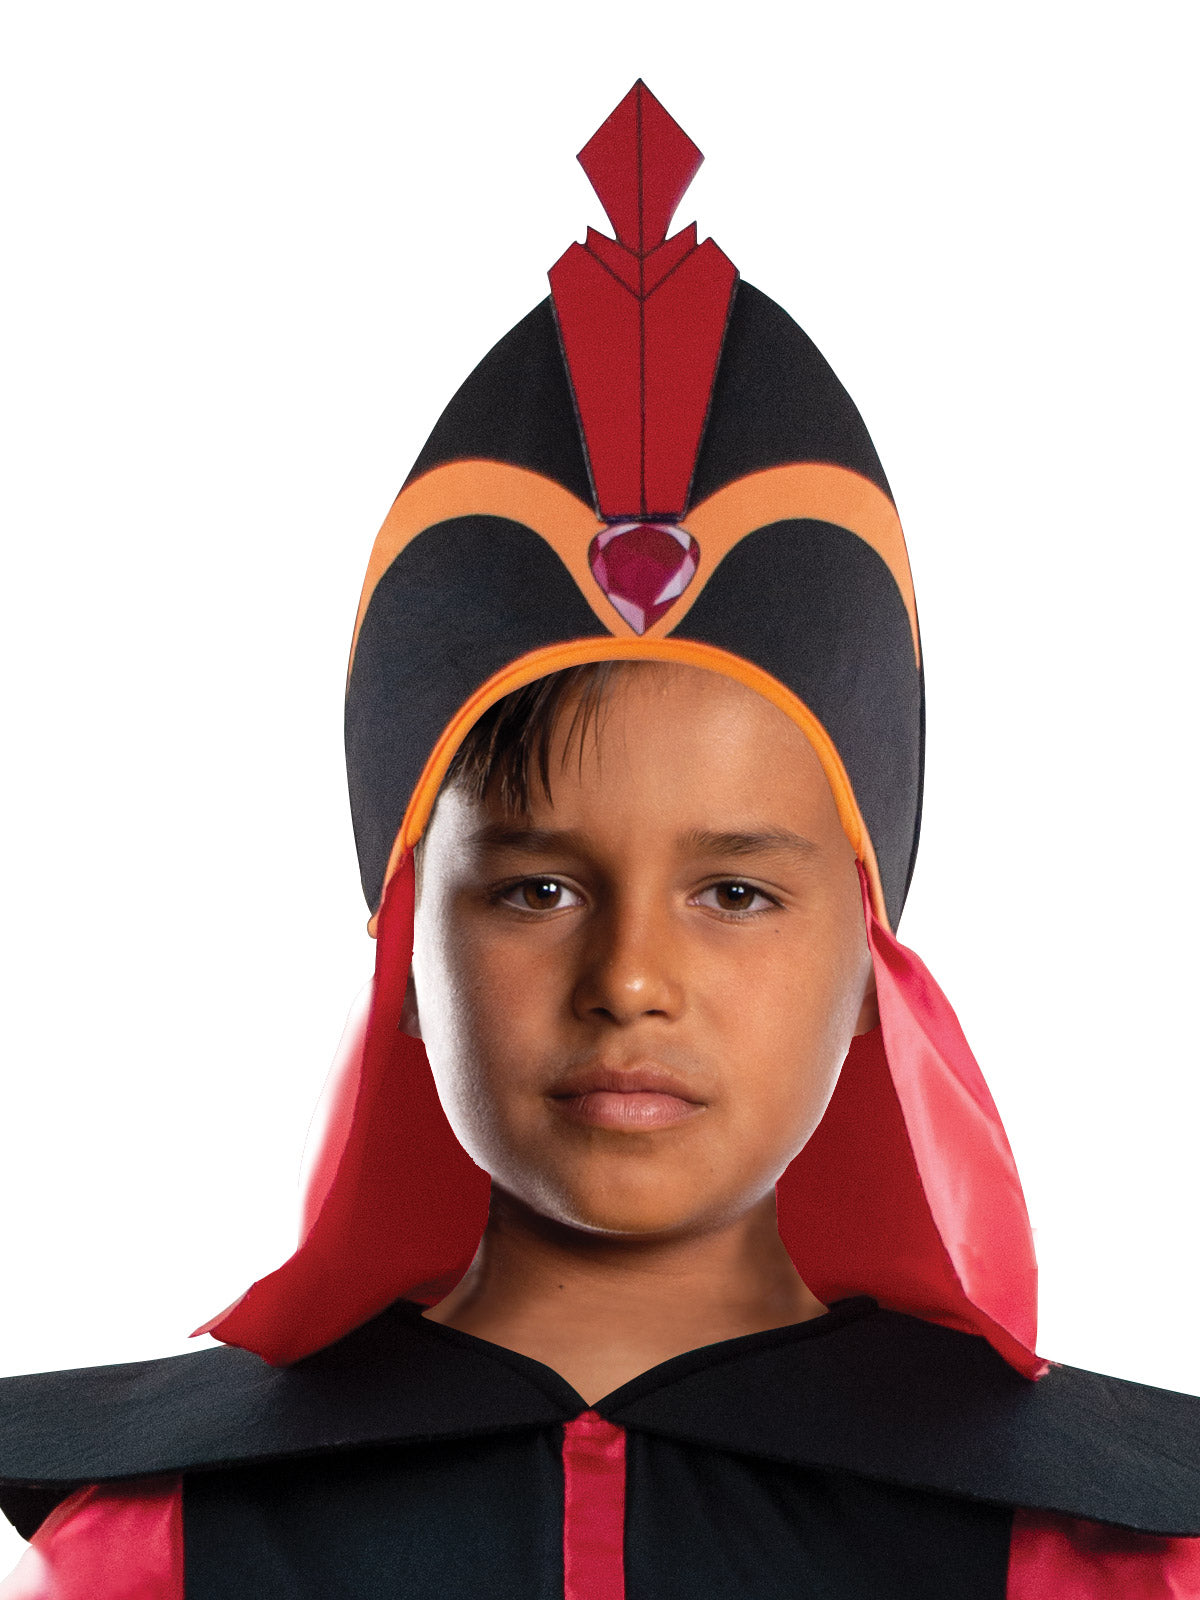 Disney Aladdin Jafar Deluxe Child Costume